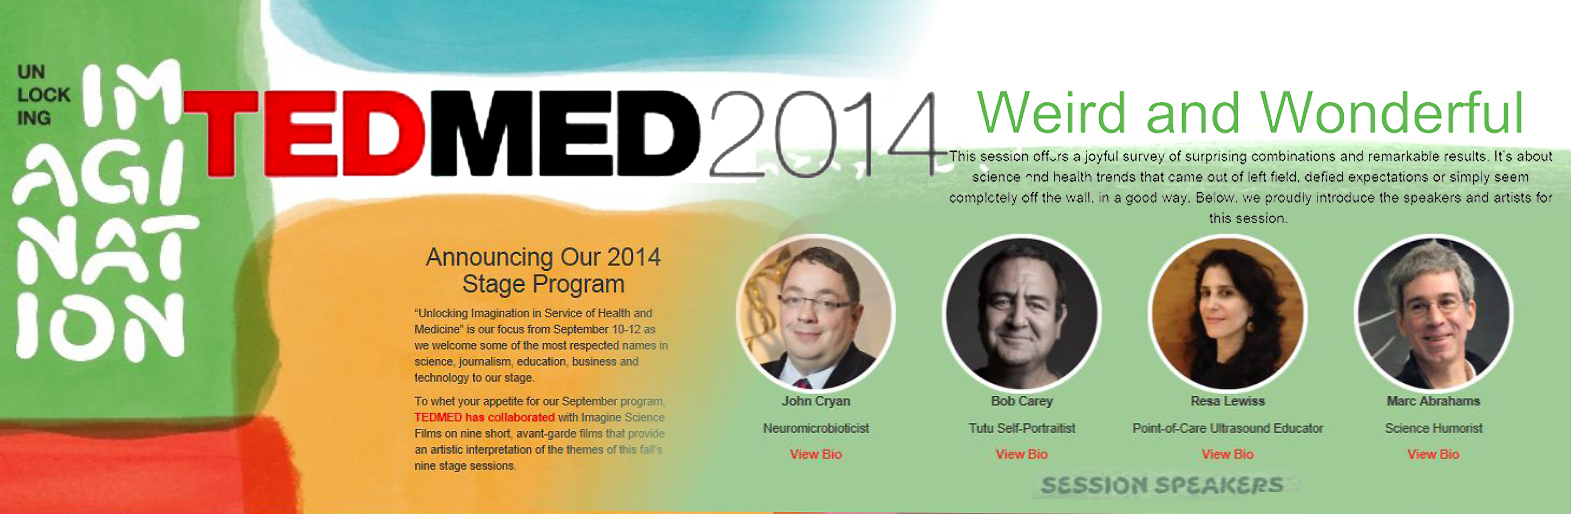 Professor Cryan invited to speak at TEDMED.